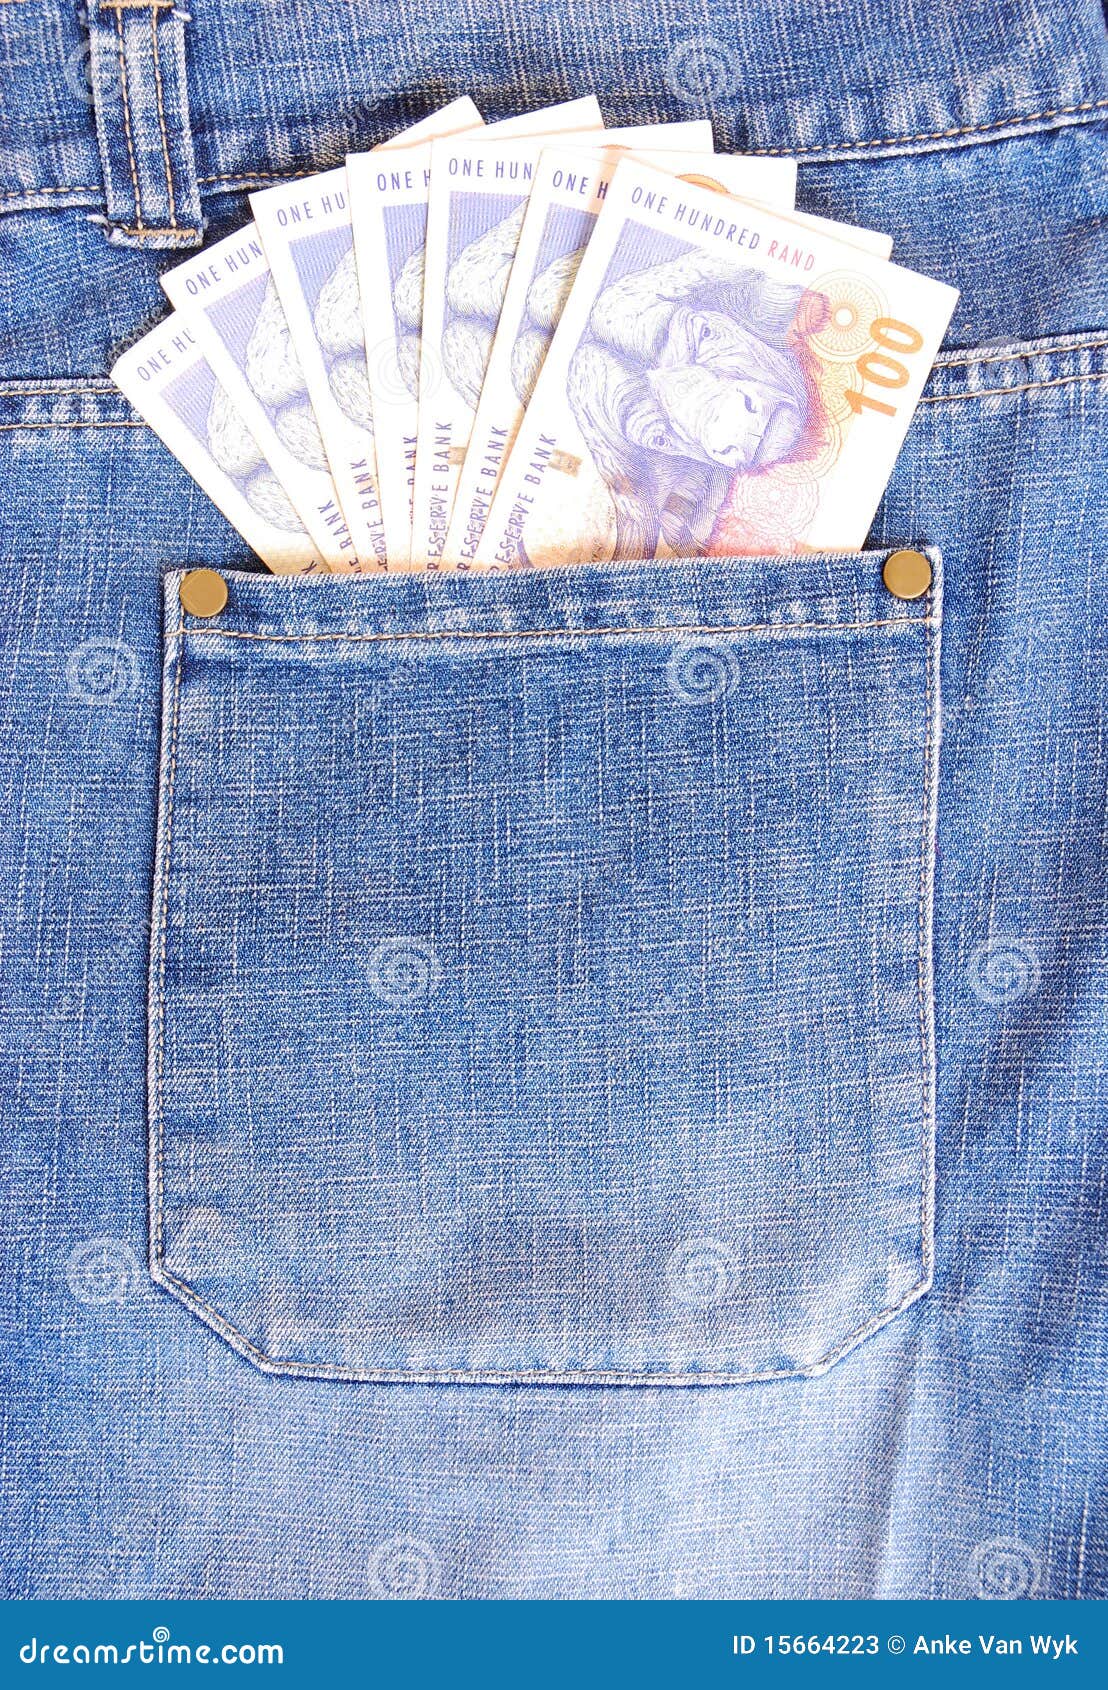 rands money in pocket